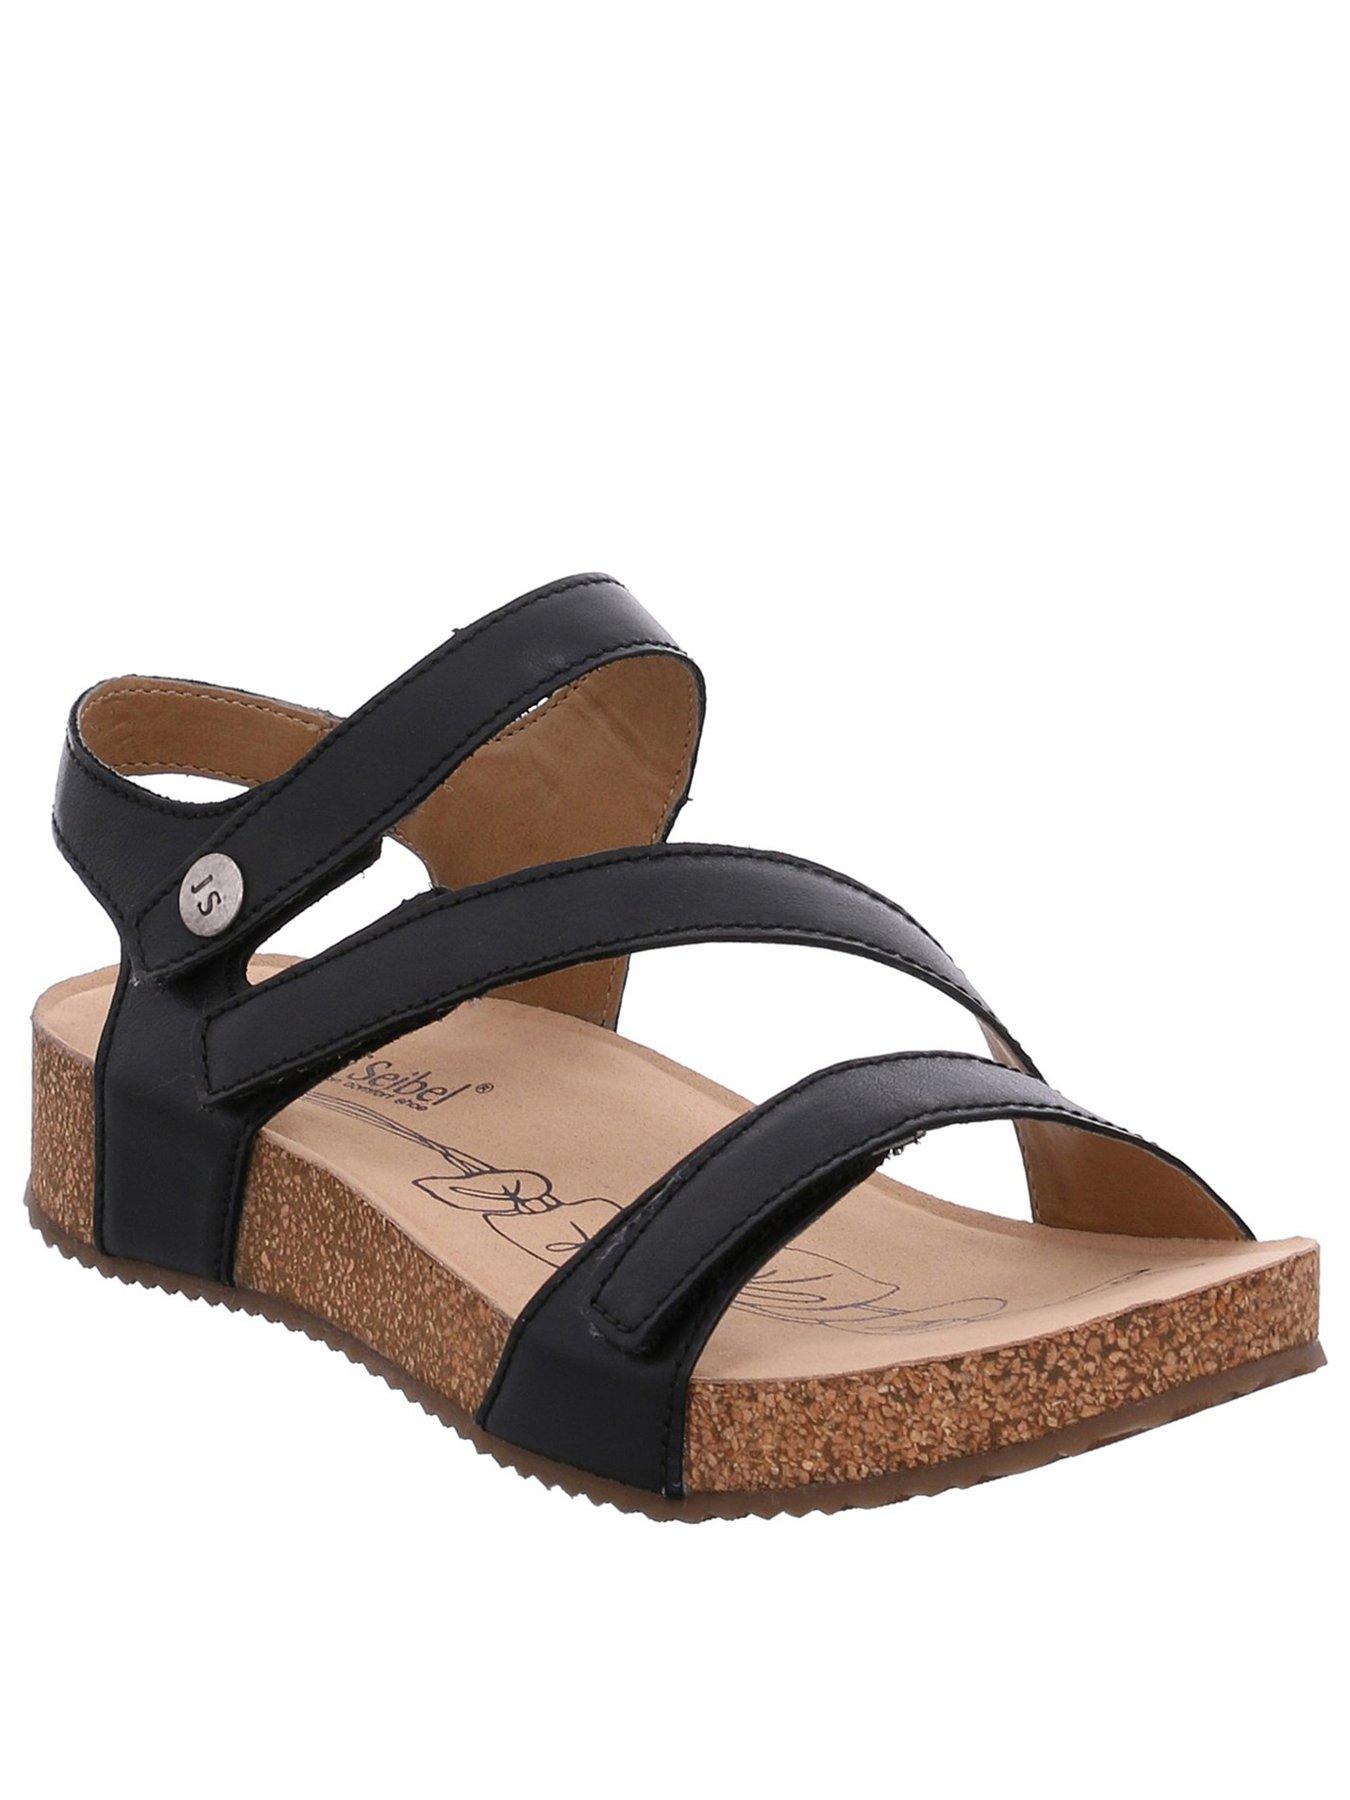  Tonga 25 Flat Sandals - Black